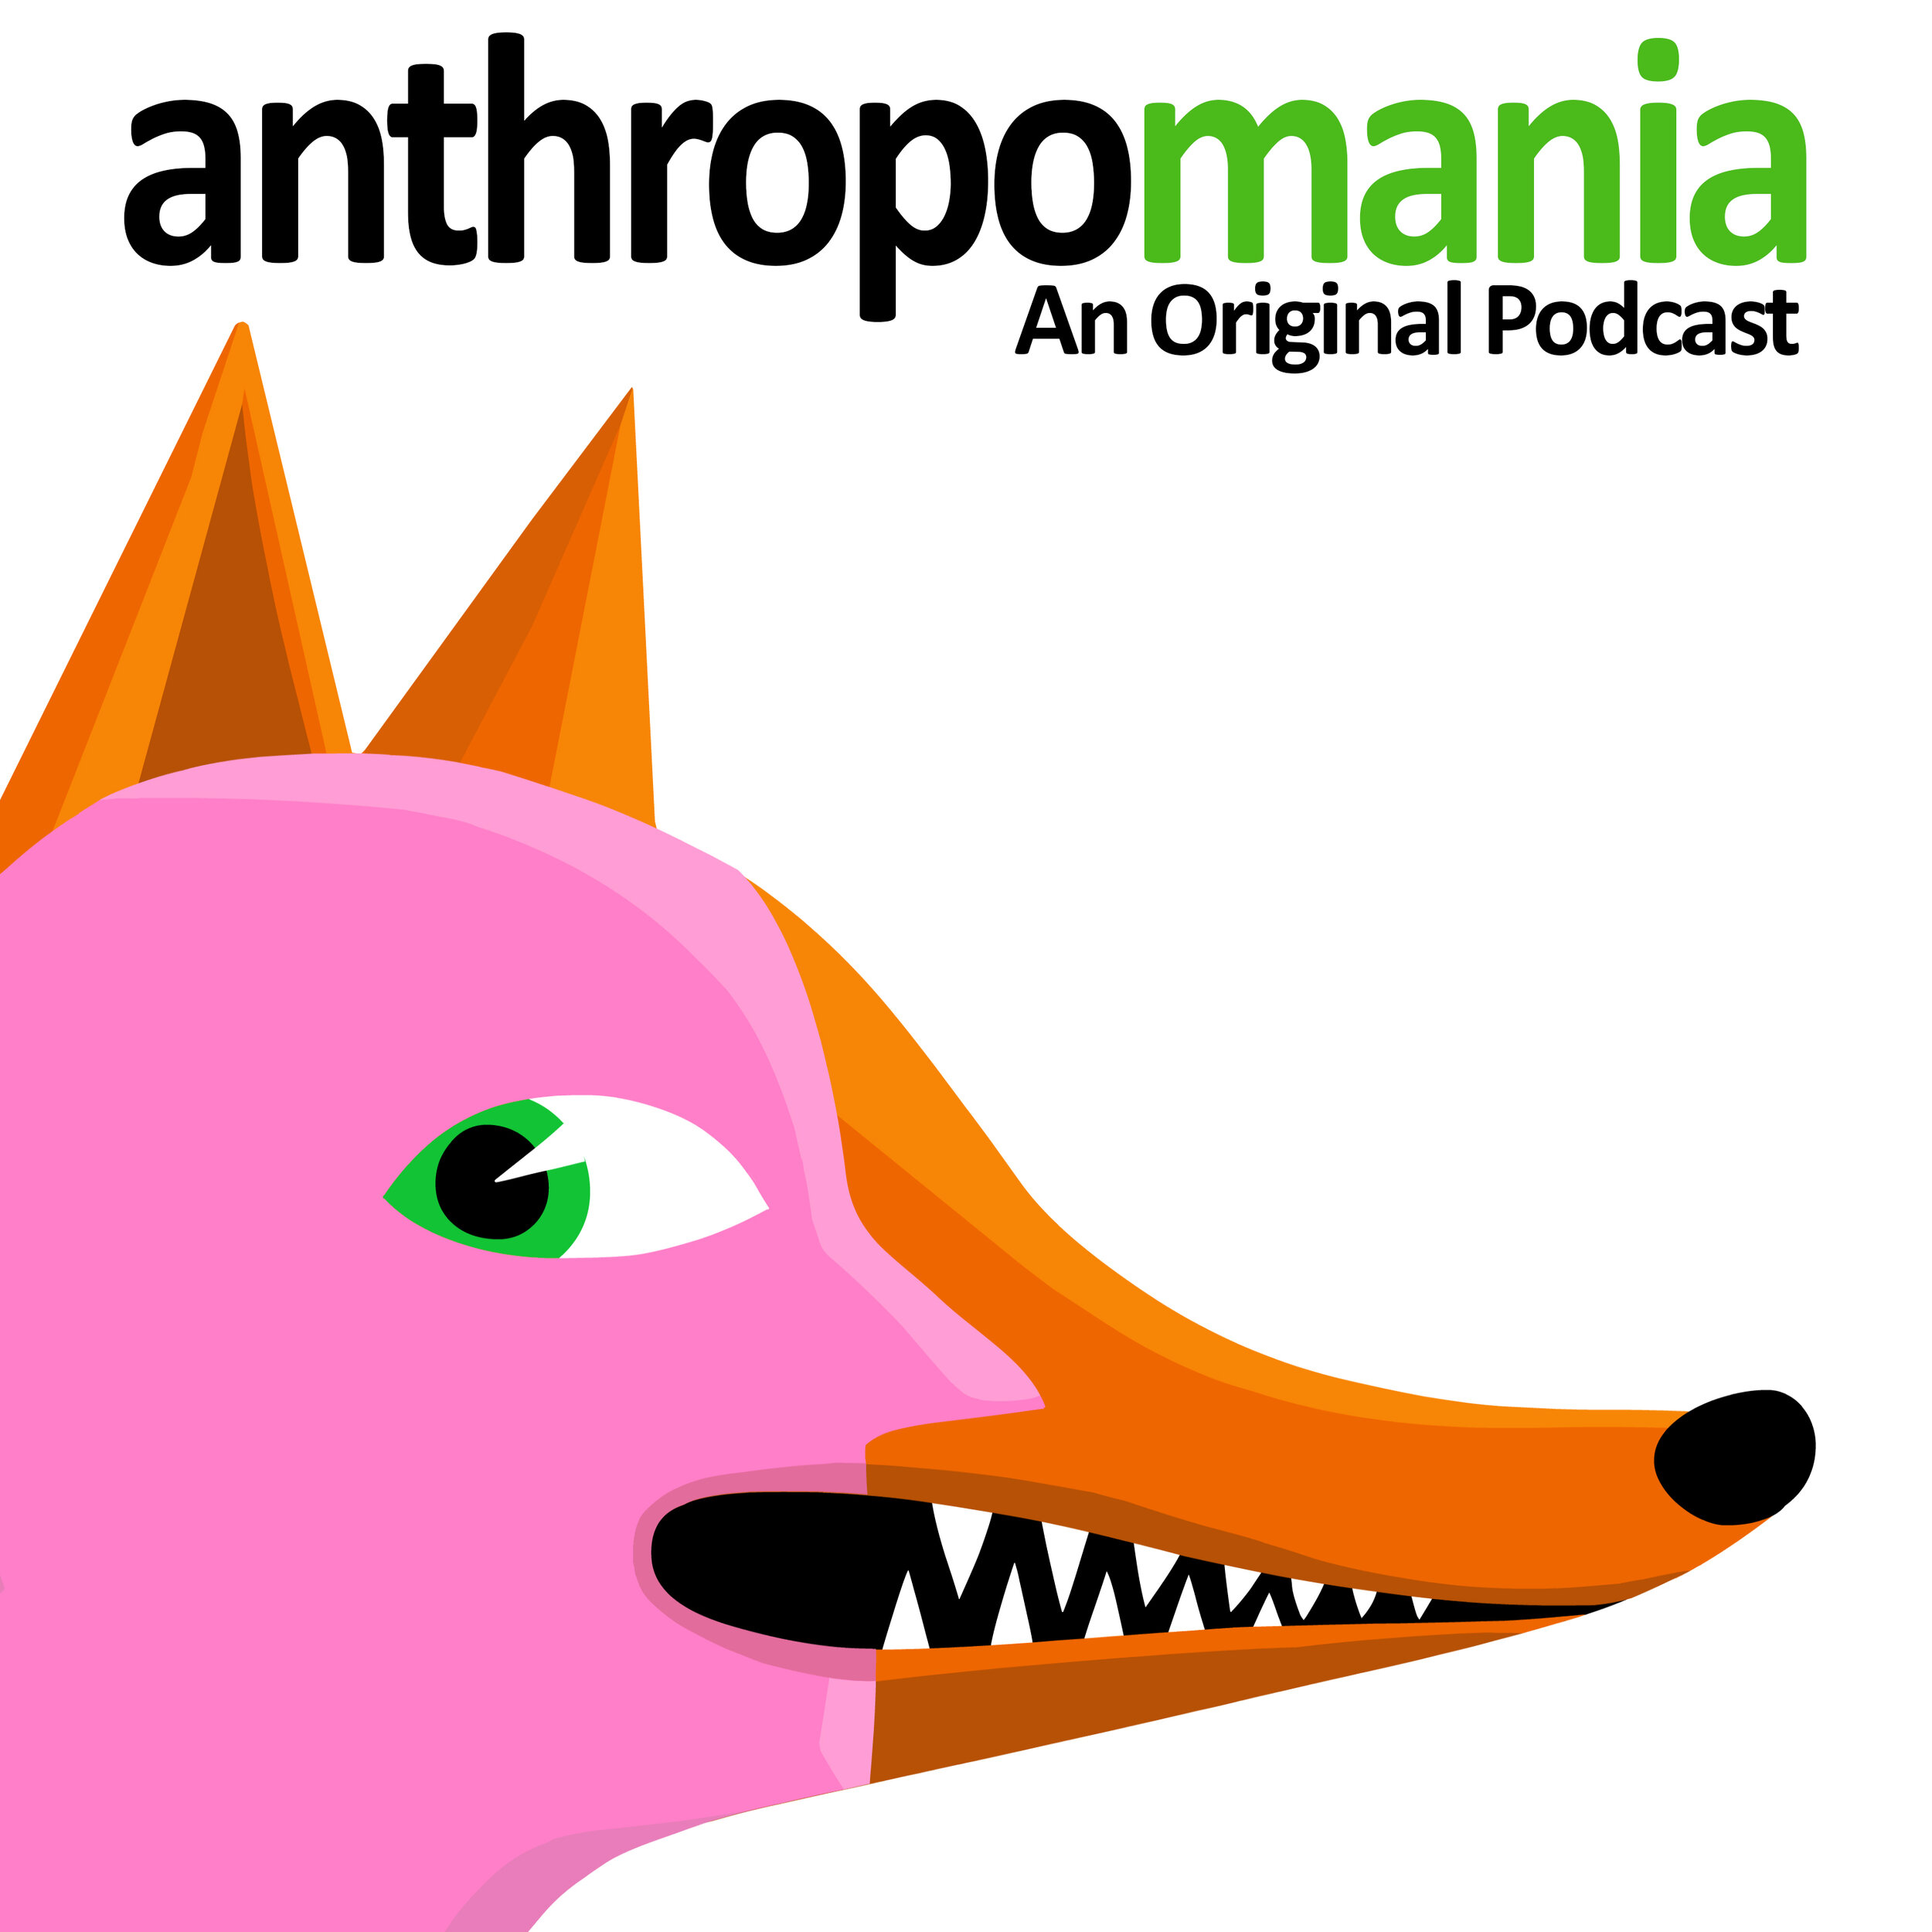  Artwork for   Anthropomania   podcast 